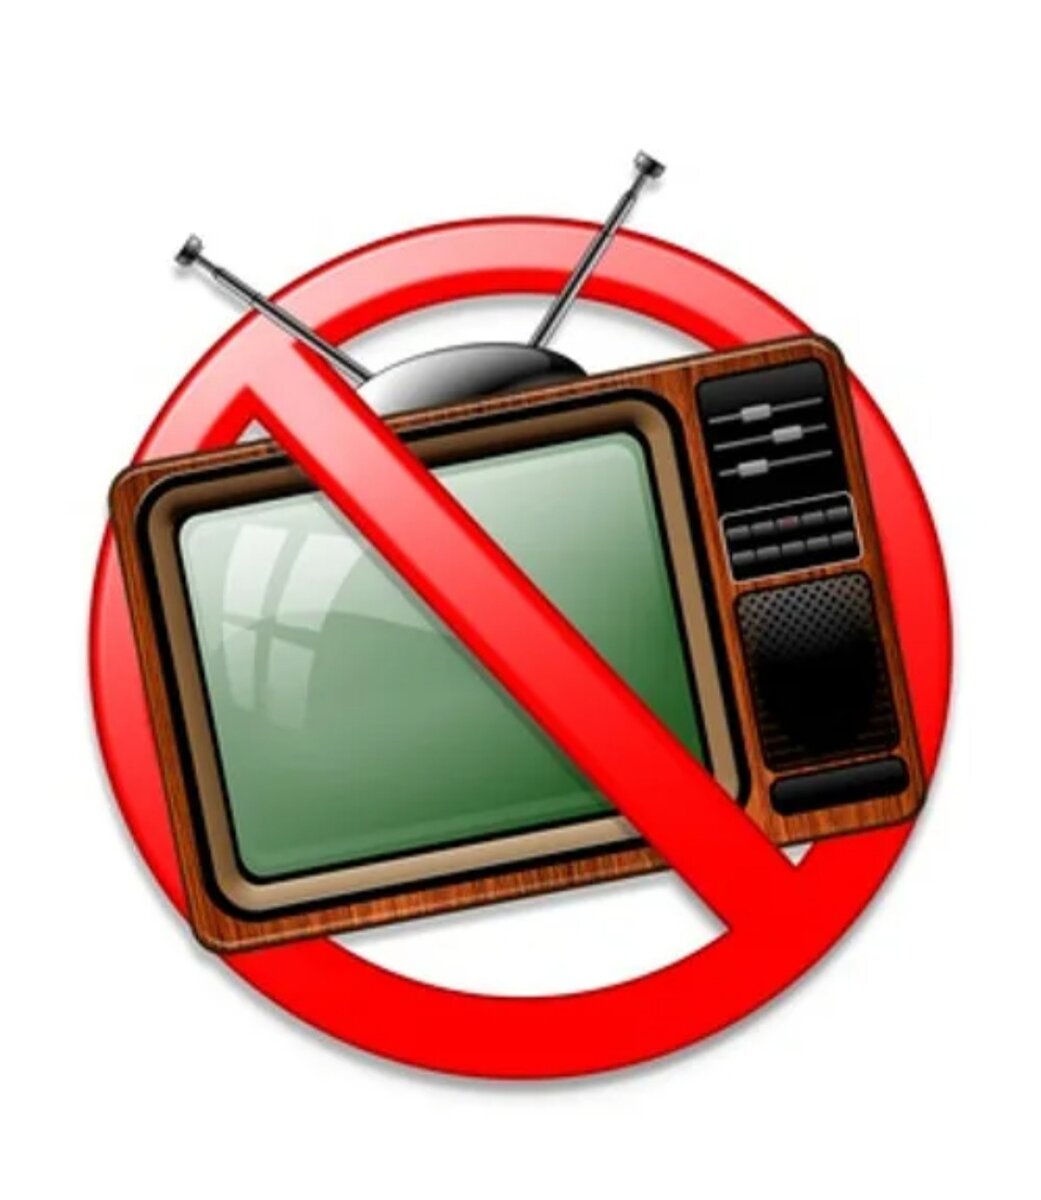 Отключи просмотр телевизора. Перечеркнутый телевизор. Запрет телевизора. Телевизор выключенный. Без телевизора.